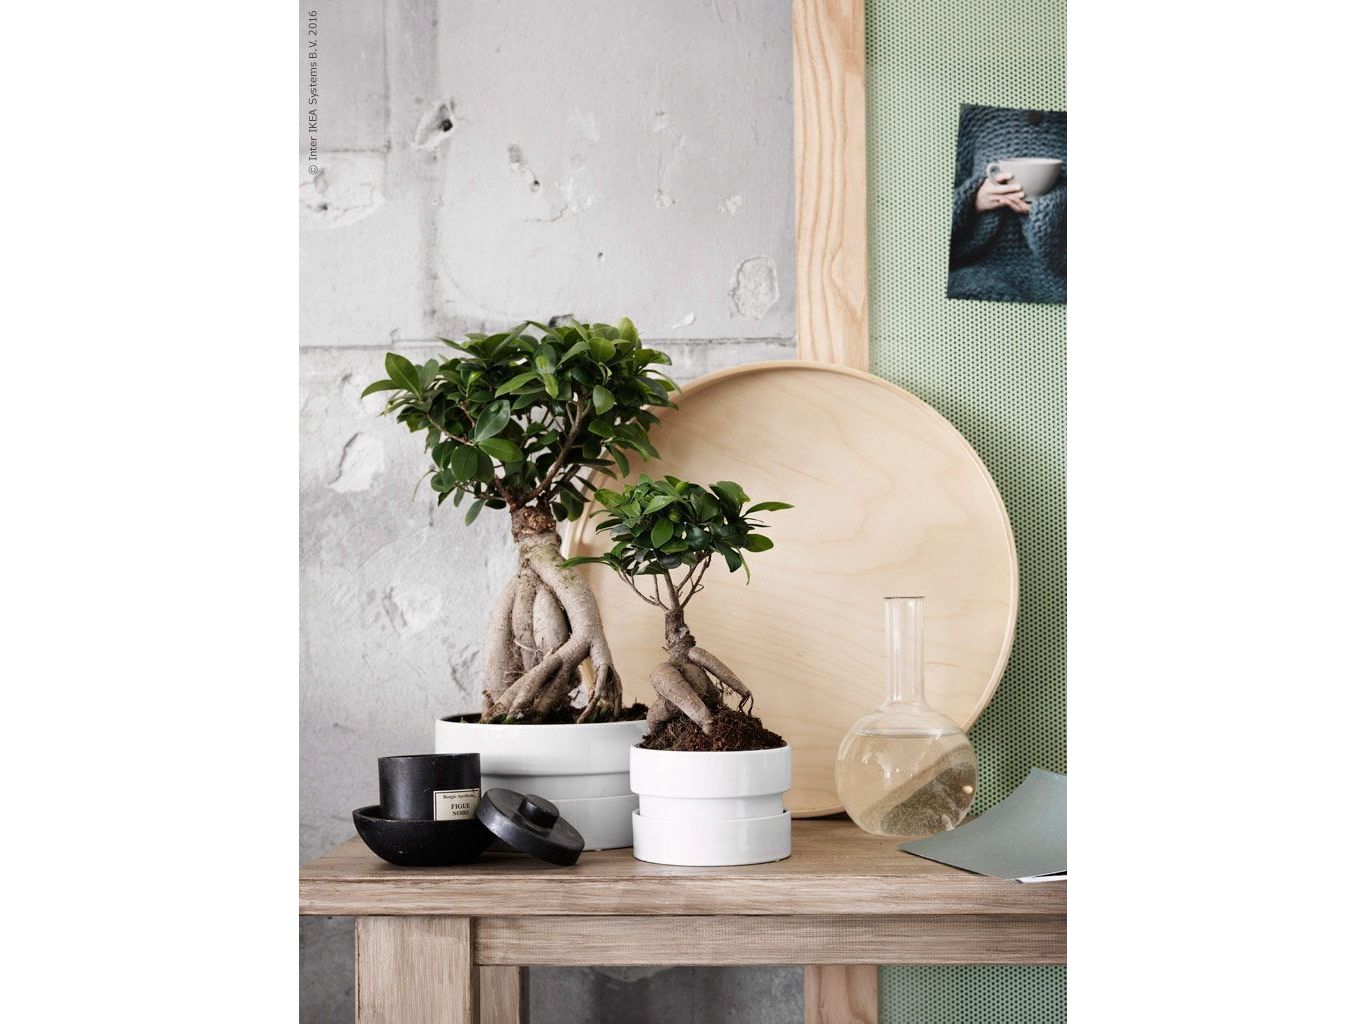 2x-bonsai-ficus-ginseng-3040-cm